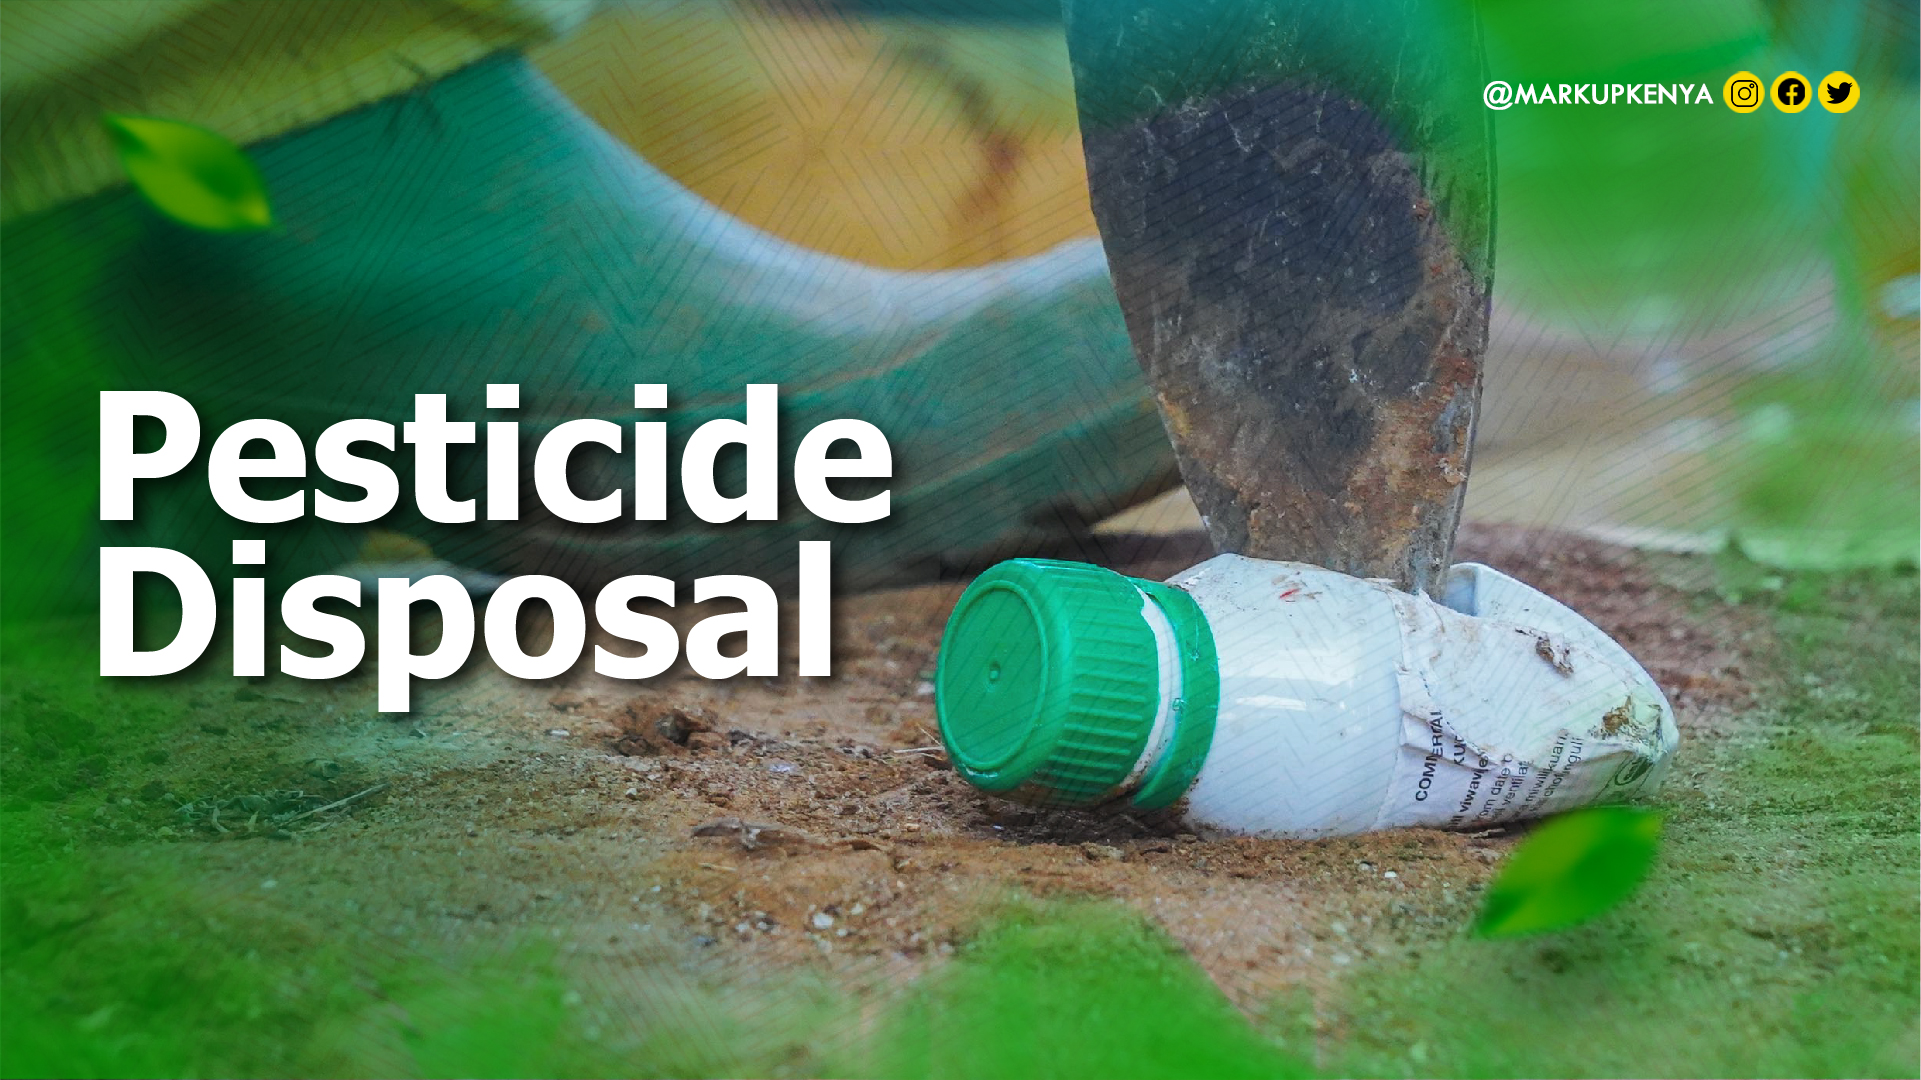 How to Dispose Pesticides Properly